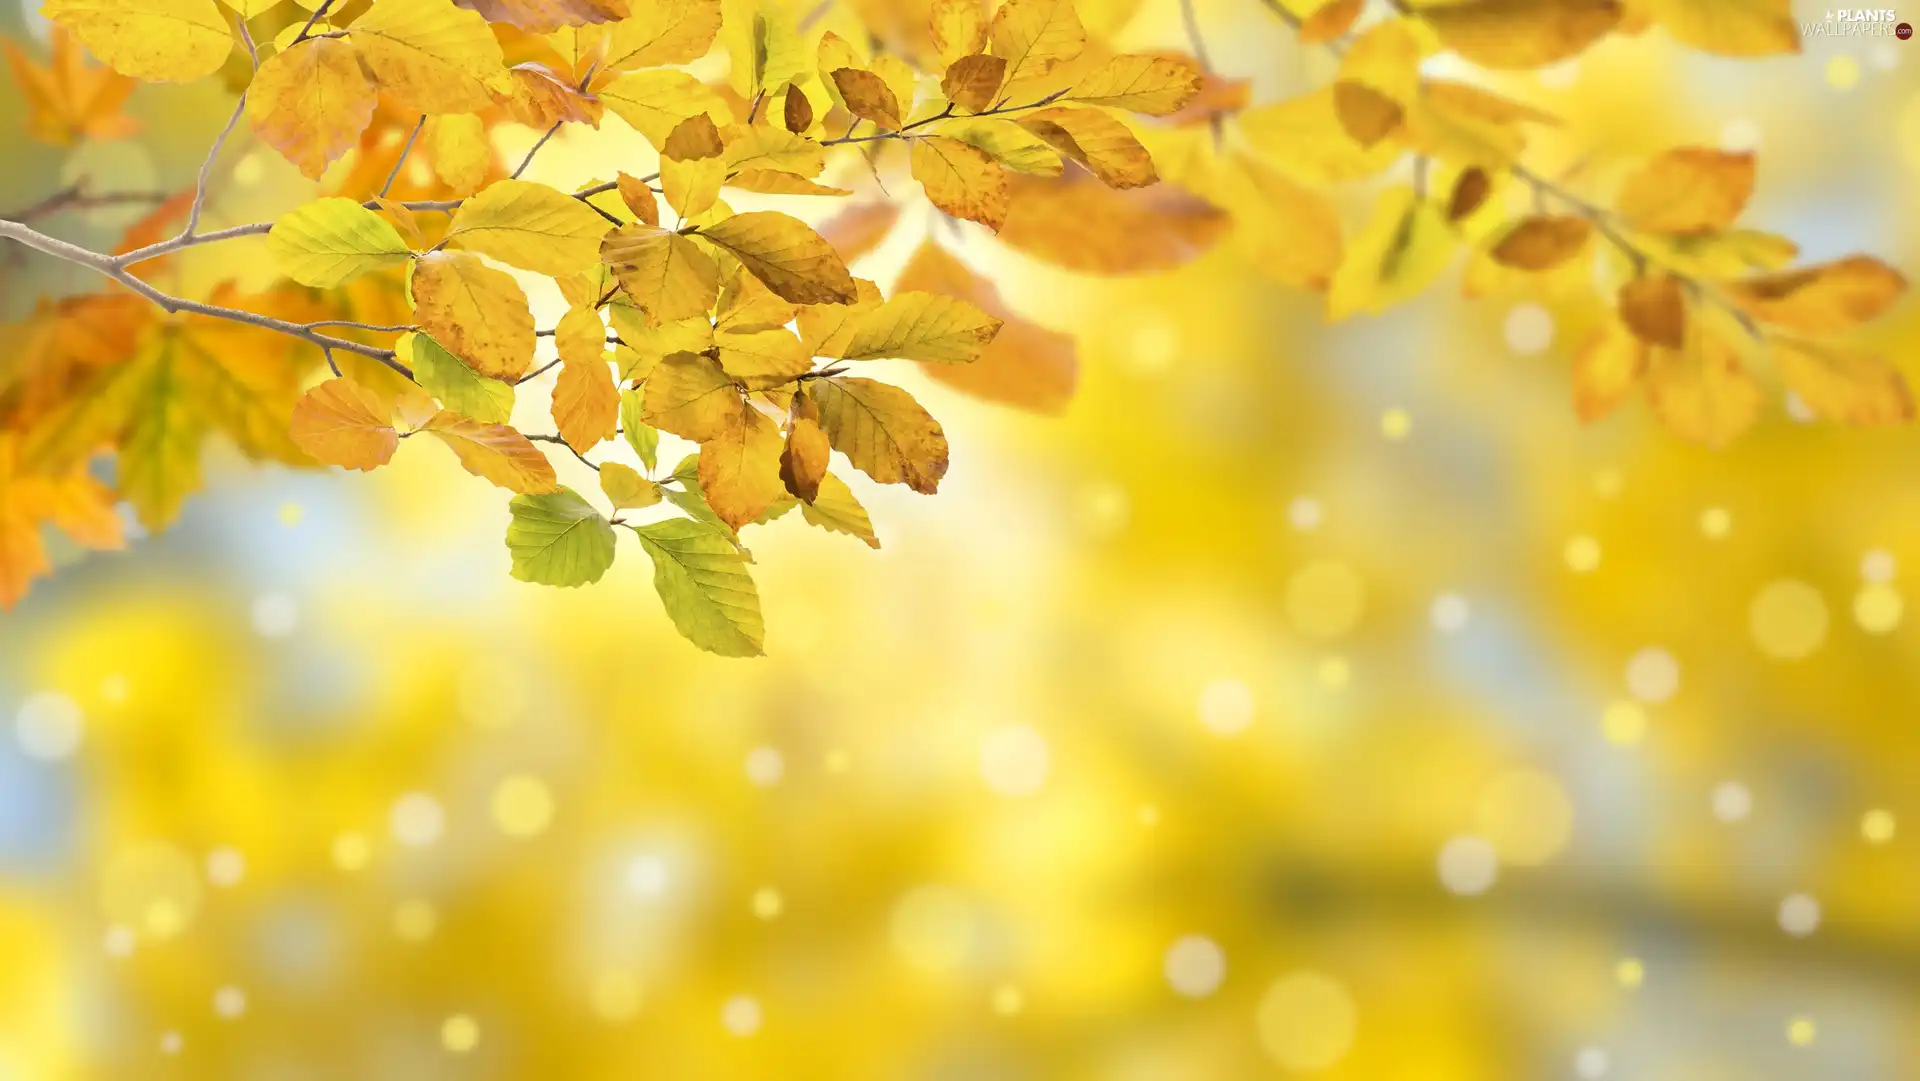 blurry background, Autumn, Leaf